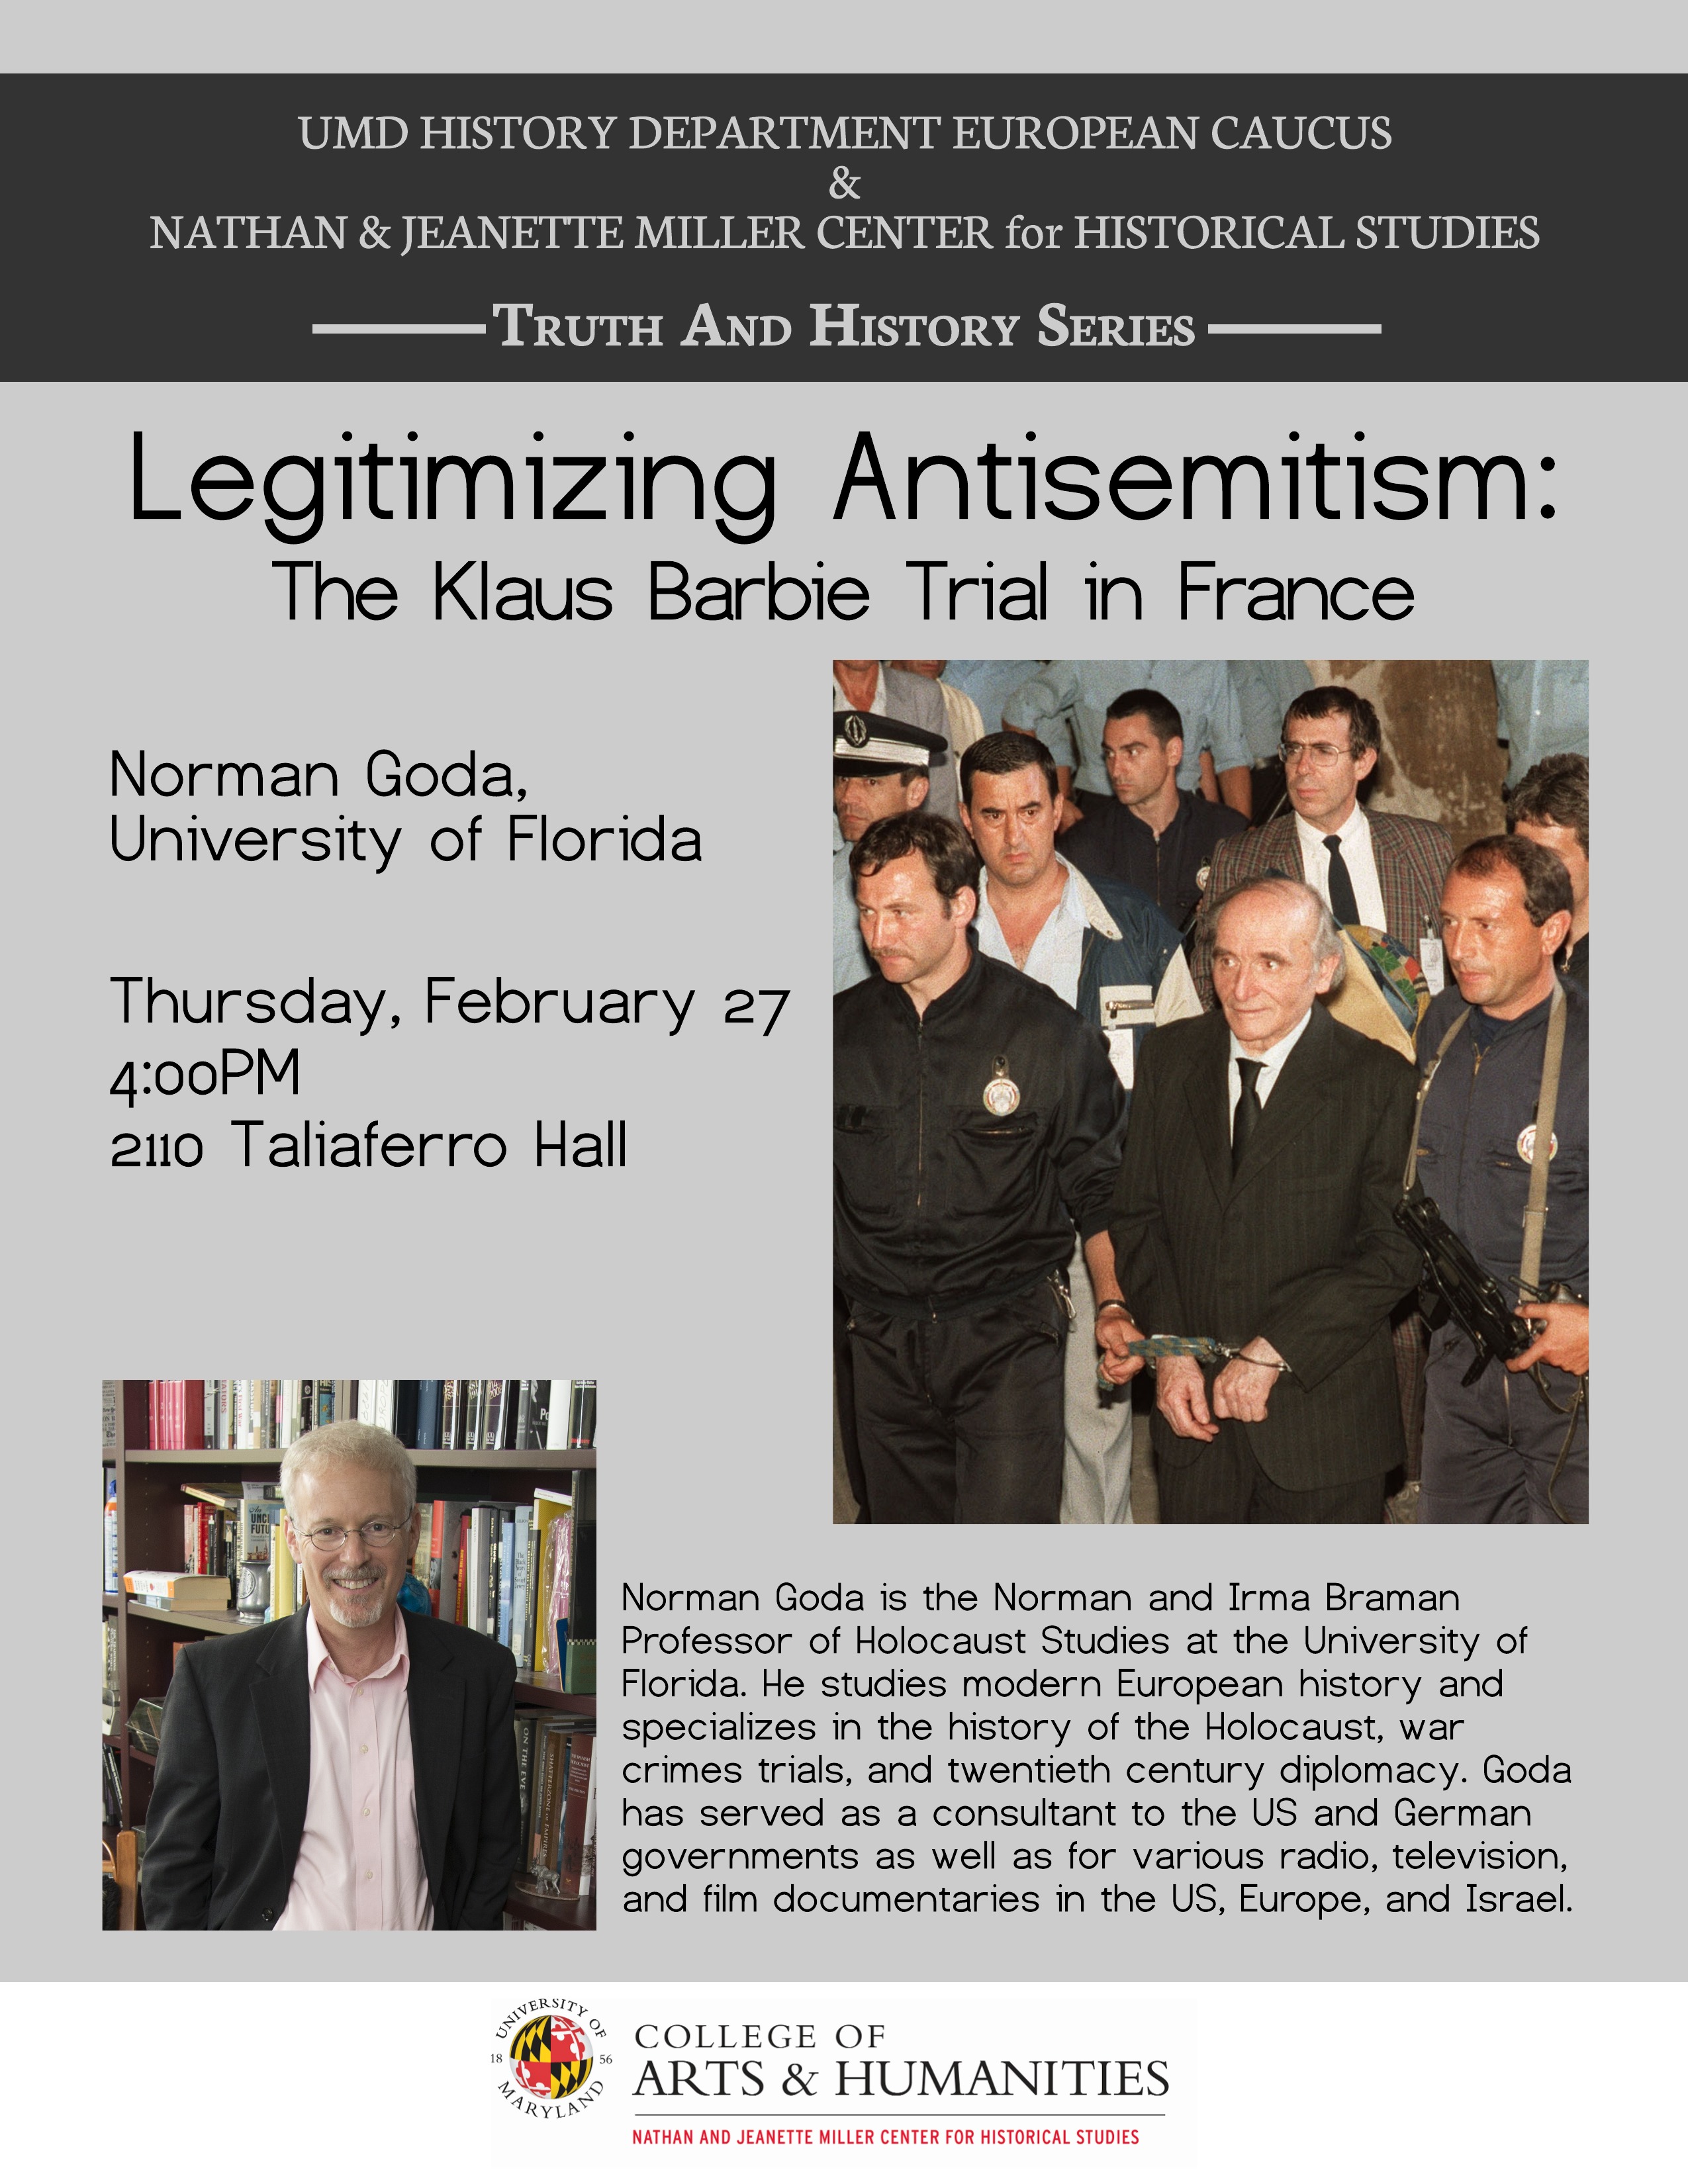 Image for event - Legitimizing Antisemitism: The Klaus Barbie Trial in France